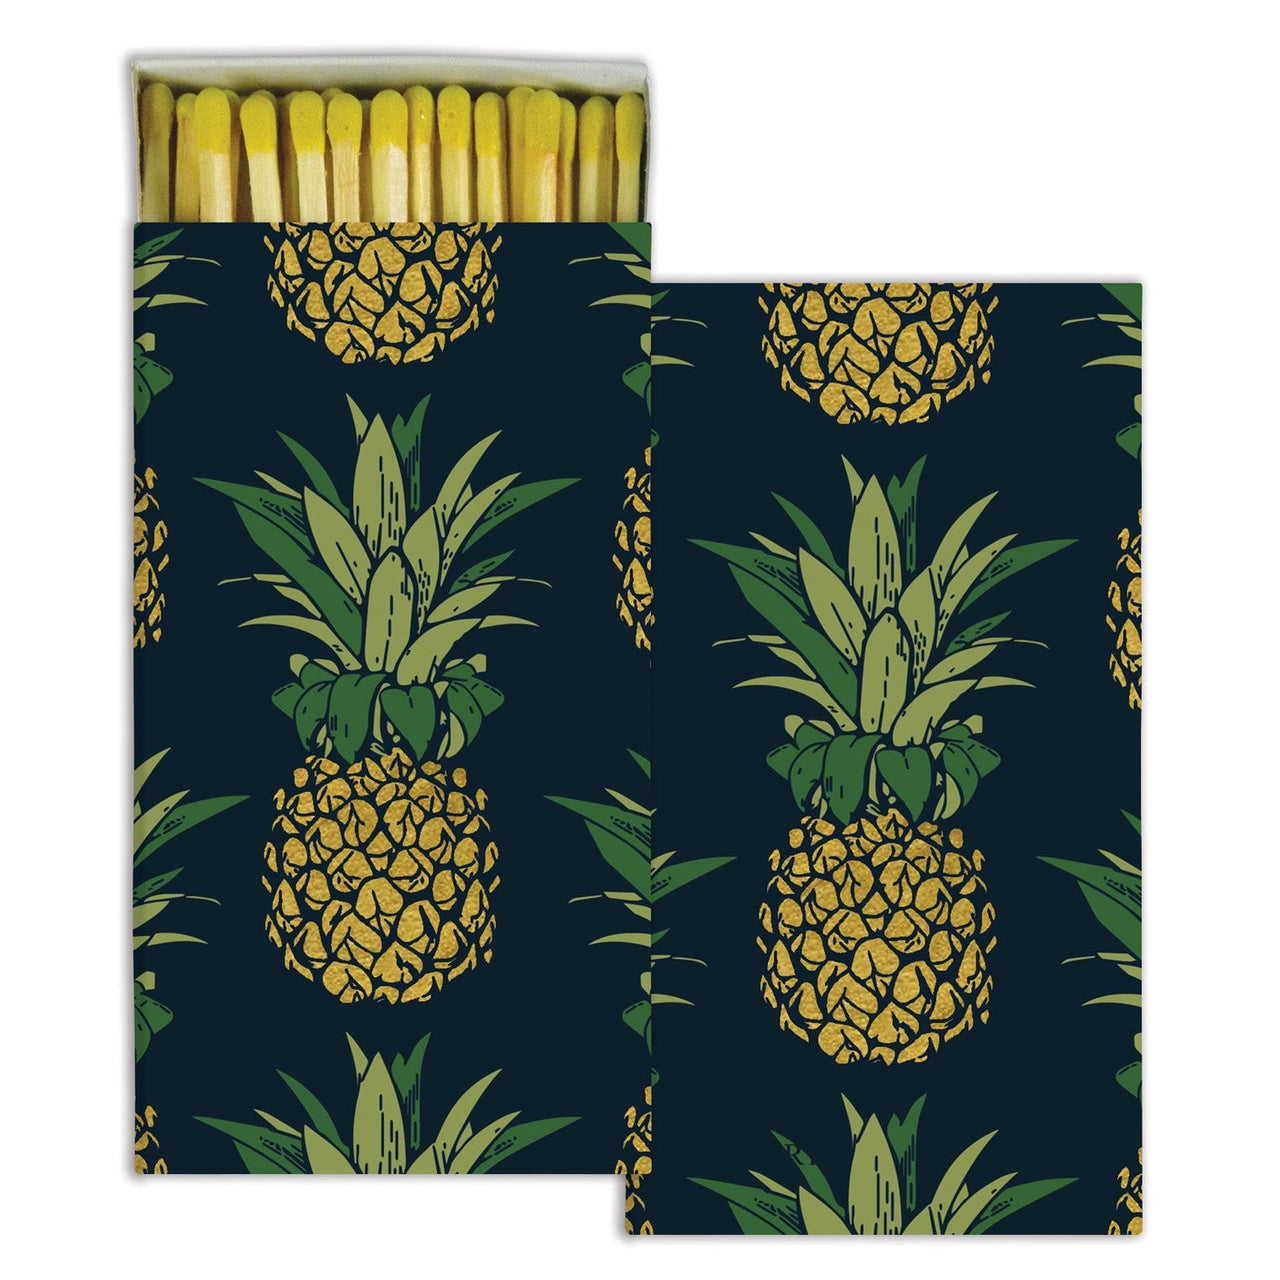 Matches - Pineapple  HomArt   